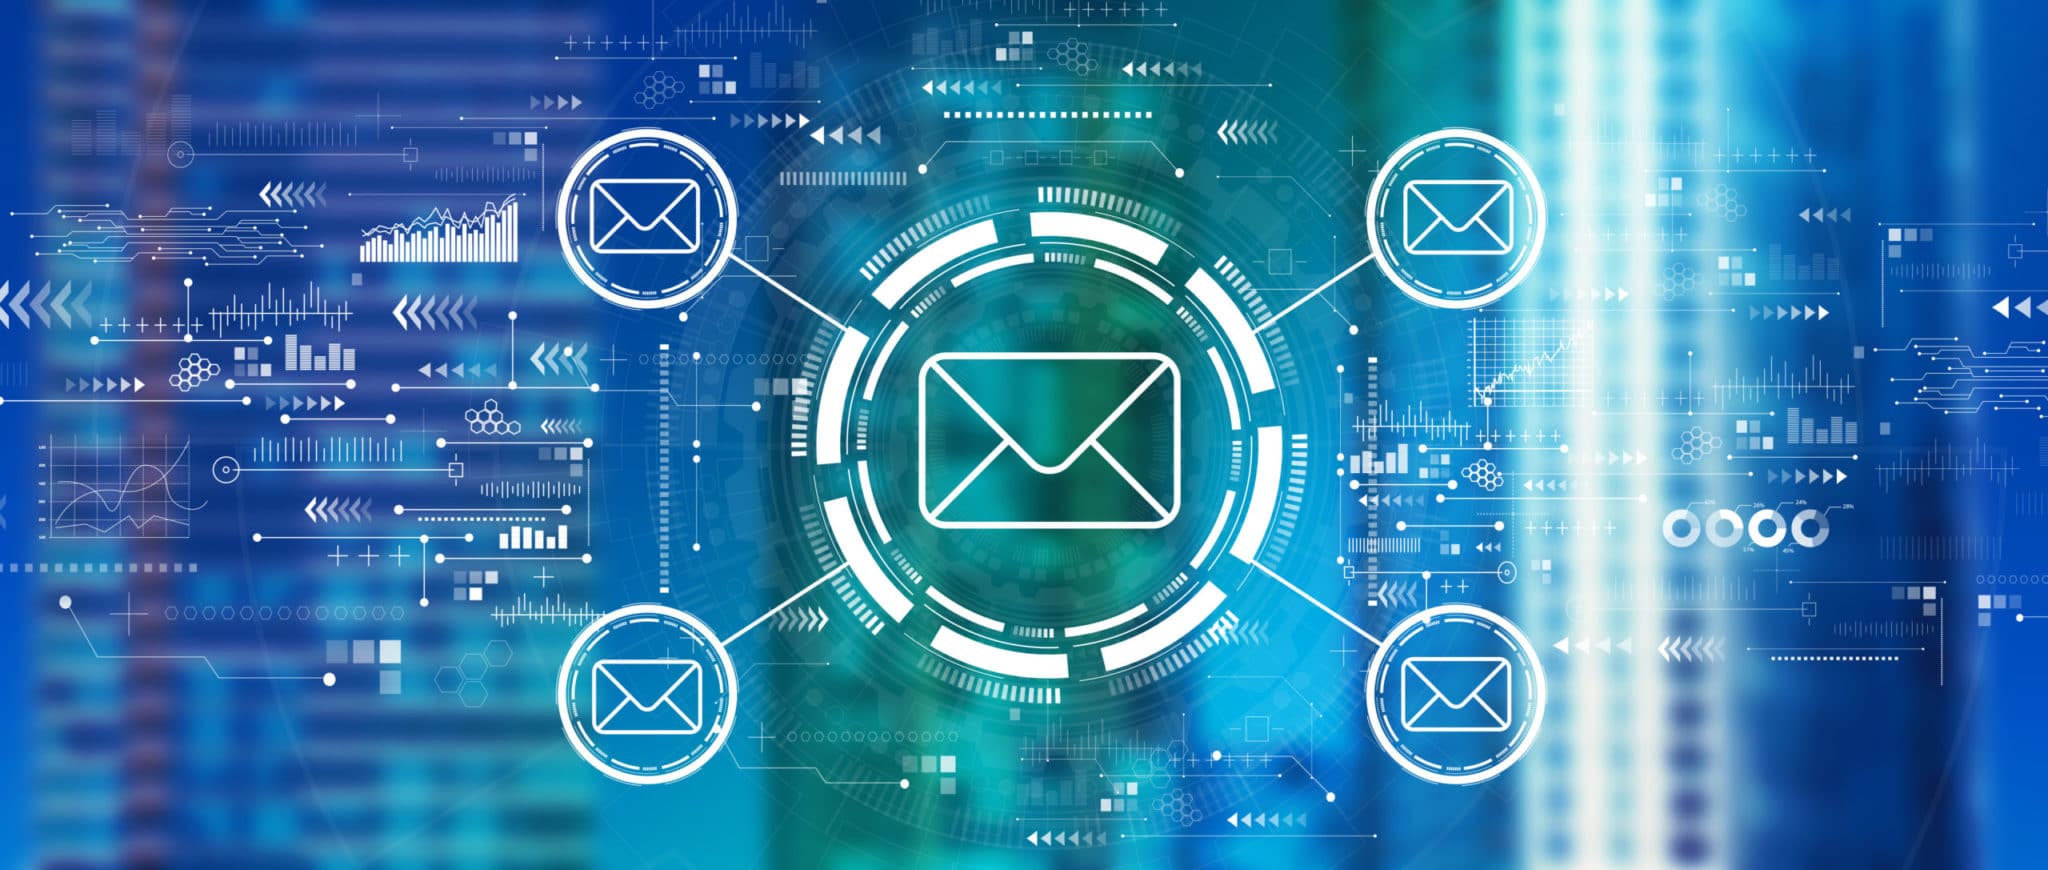 banner image of emails as envelopes on blue background